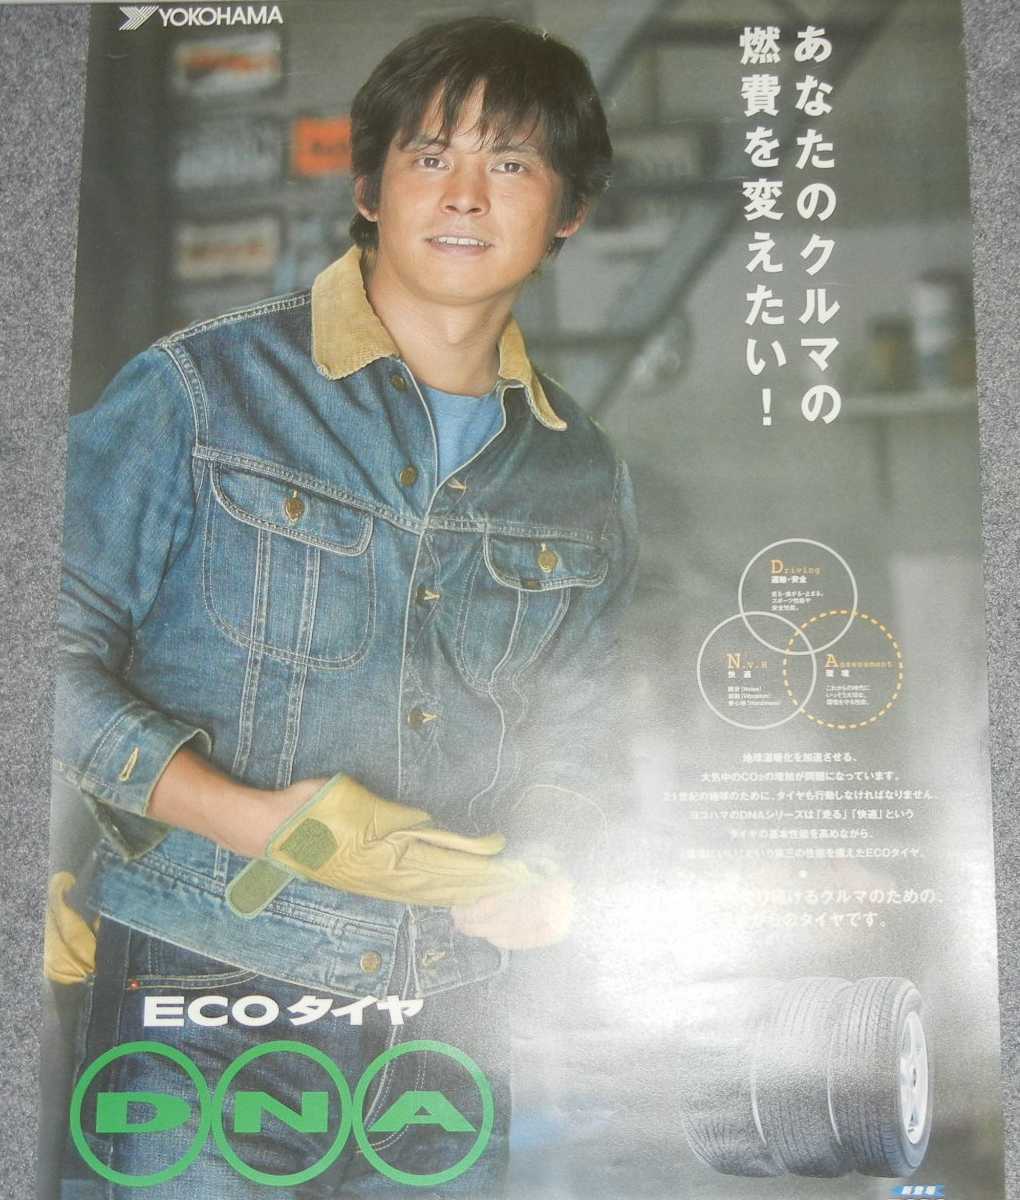 ◆ Плакат ◆ Yuji Oda / Yokohama Eco Tire ДНК